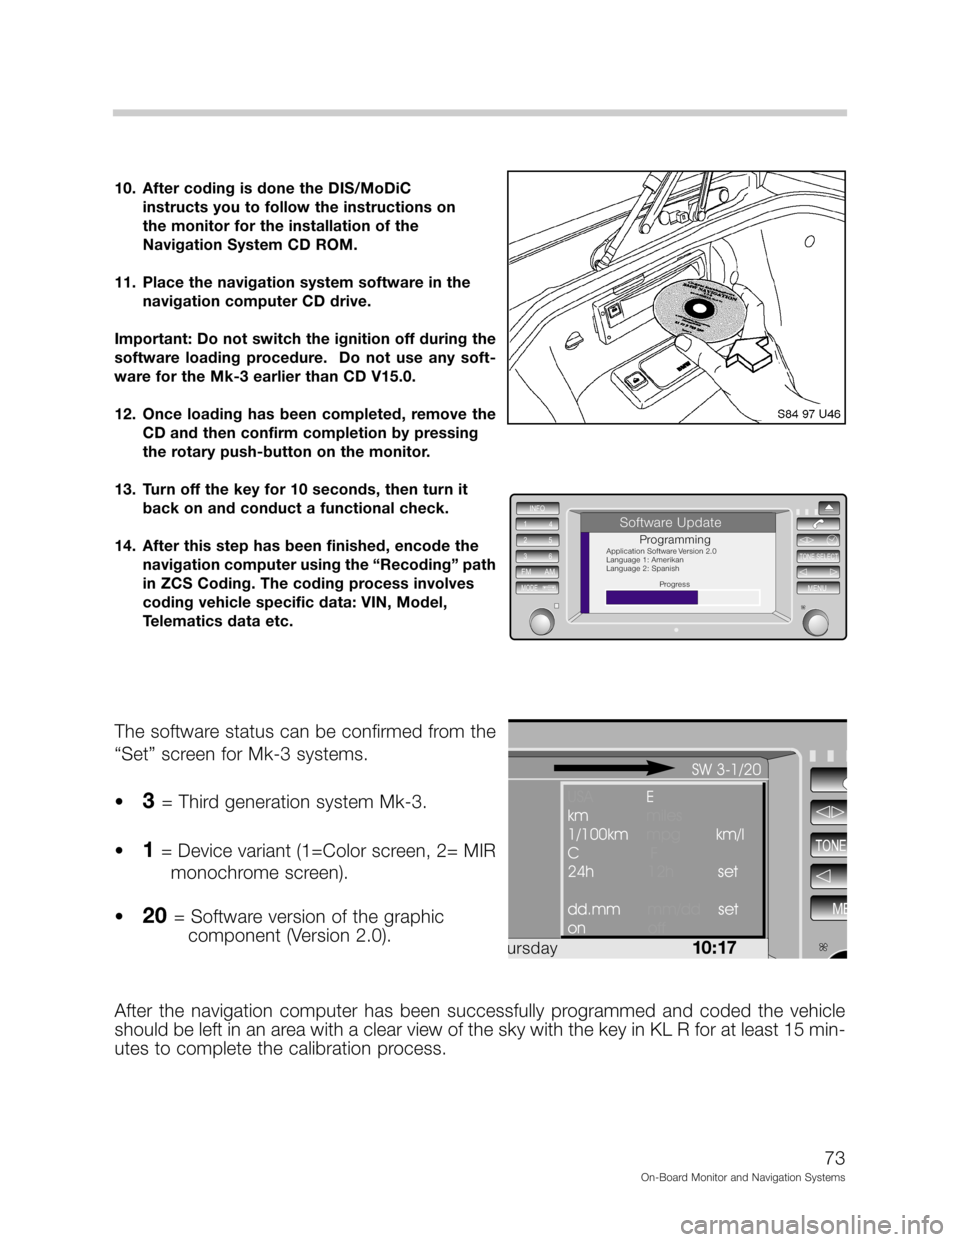 BMW X5 2001 E53 On Board Monitor System Manual PDF ,.



"&
(	
#%) 6 !1 !&
=	 2
 !-67& ! !!
&.! 6& !"" !6&
", 1" !-.2	)
##) 